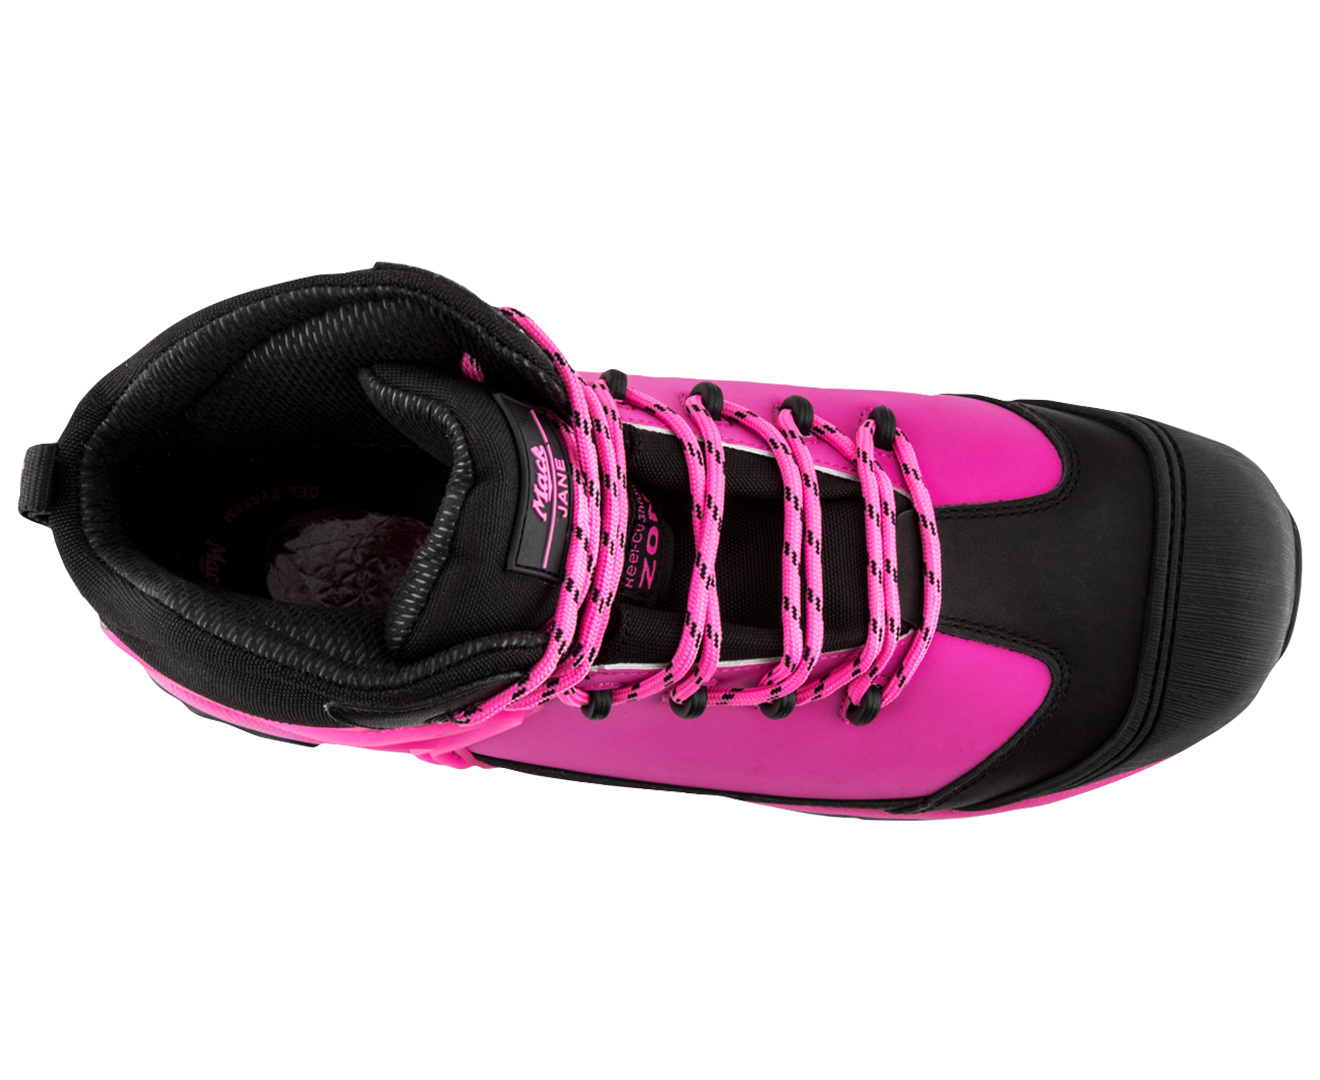 Mack Men's McGrath Composite Boot - Black/Fluro Pink | Catch.co.nz